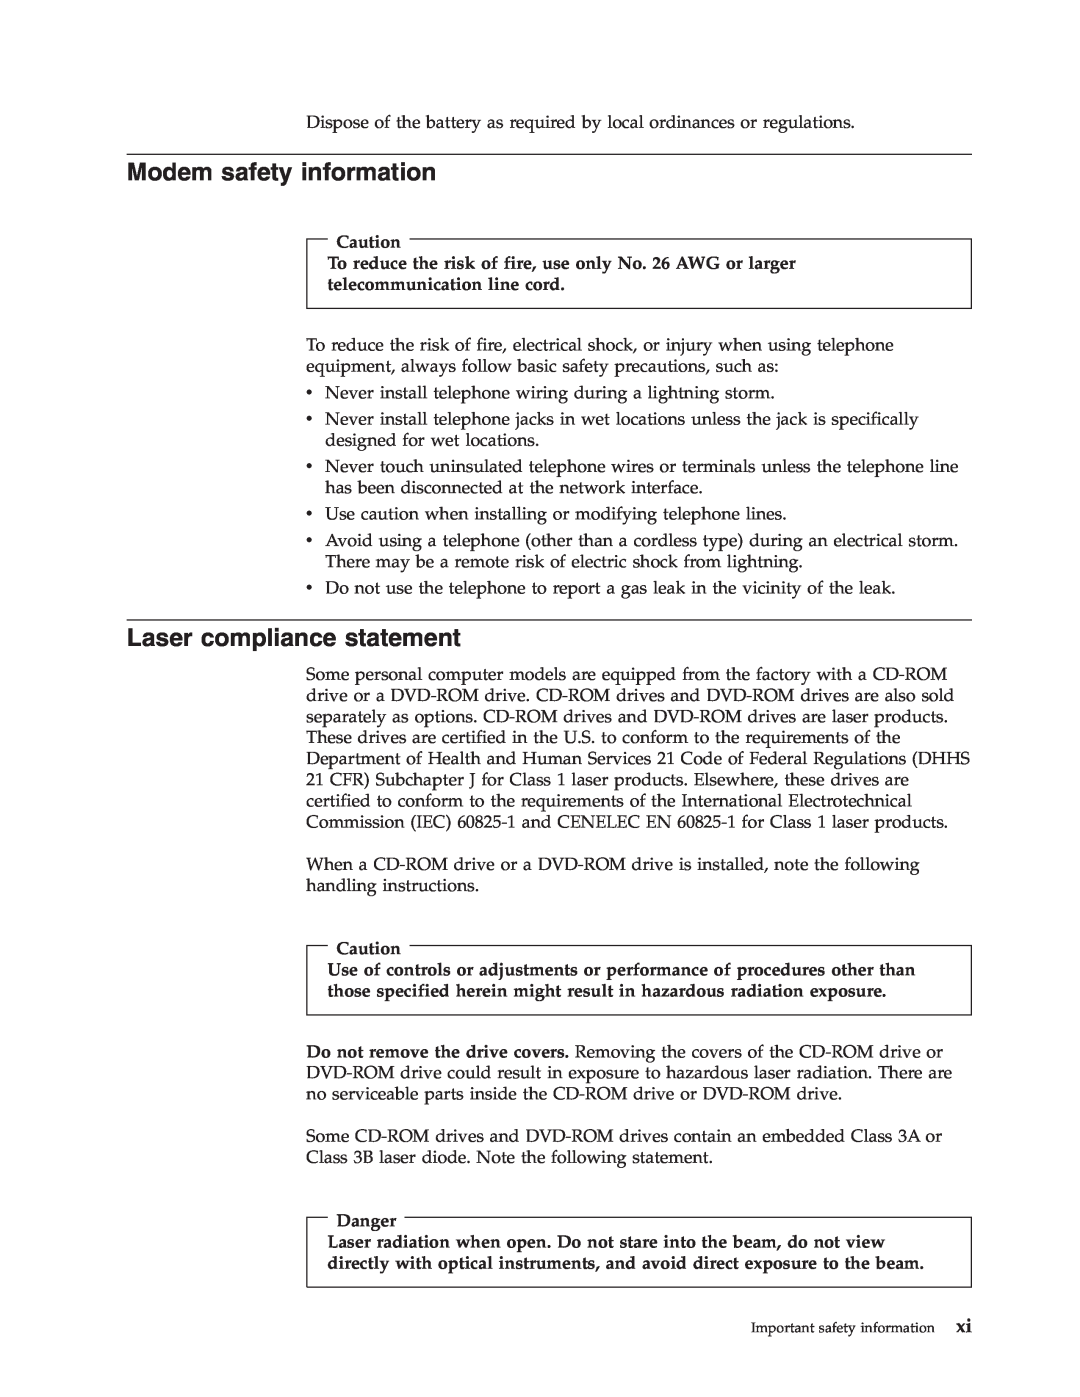 Lenovo 8812, 8009, 8795, 8791, 8807, 8803, 8799 manual Modem safety information, Laser compliance statement 